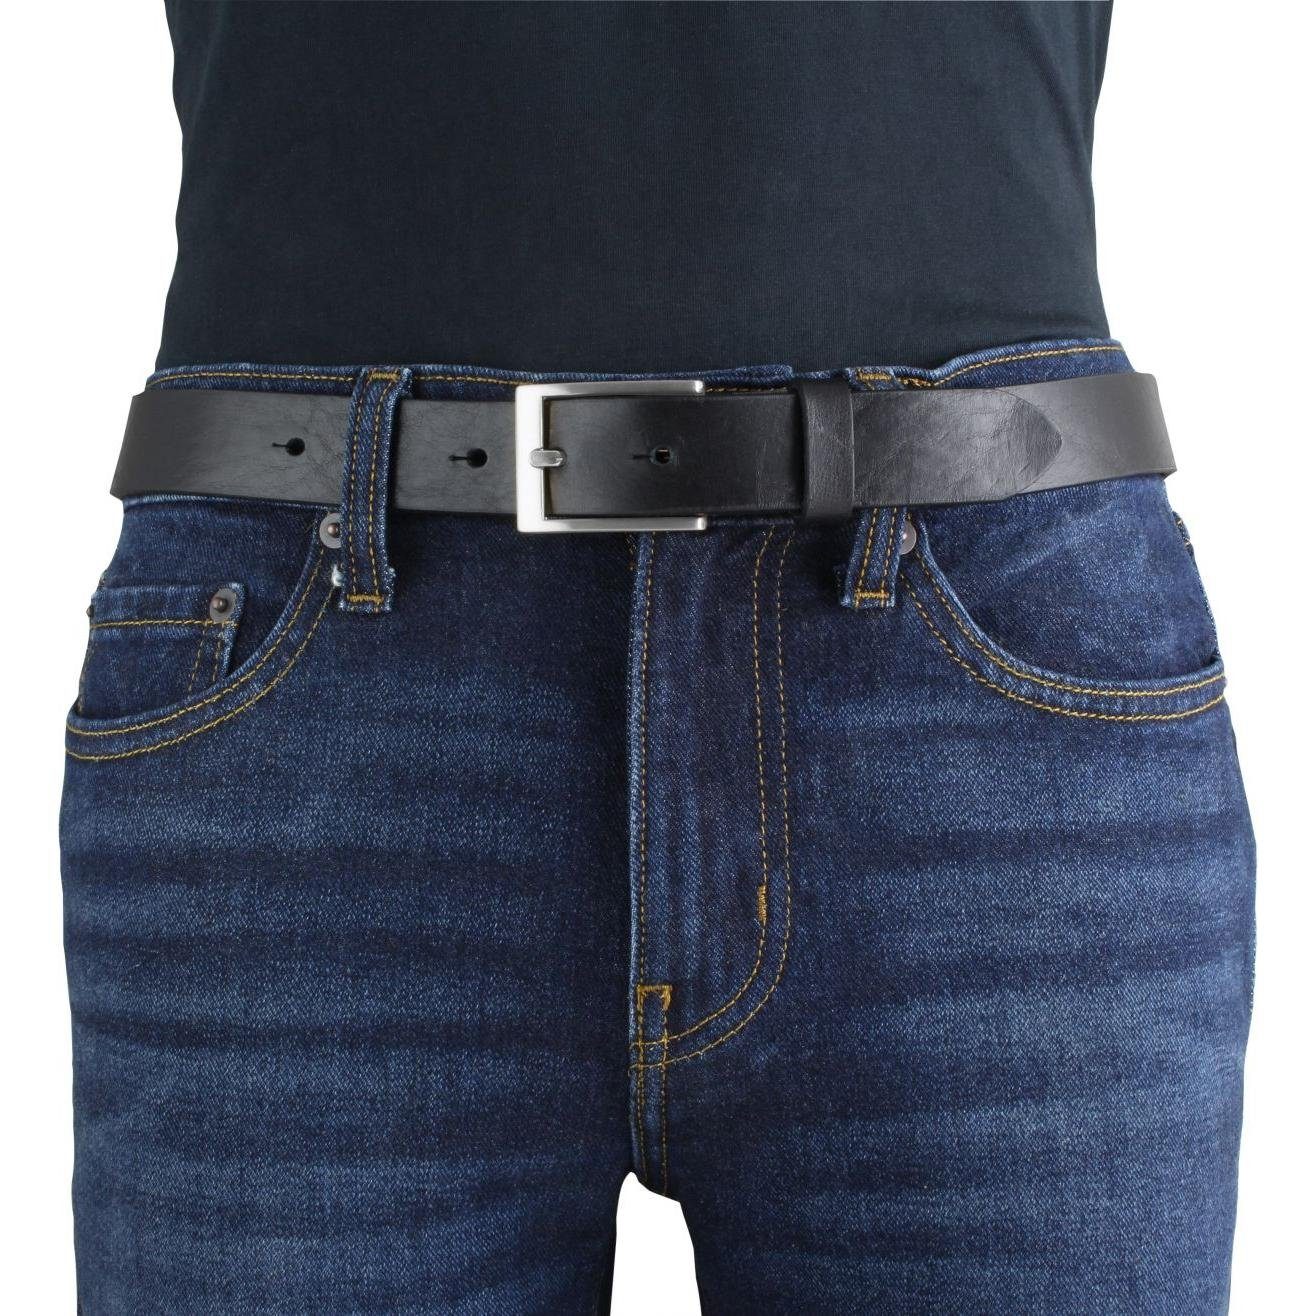 BELTINGER Herren - Gürtel C Anzug-Gürtel 30mm aus cm für Schwarz 3 Damen - Ledergürtel Vollrindleder